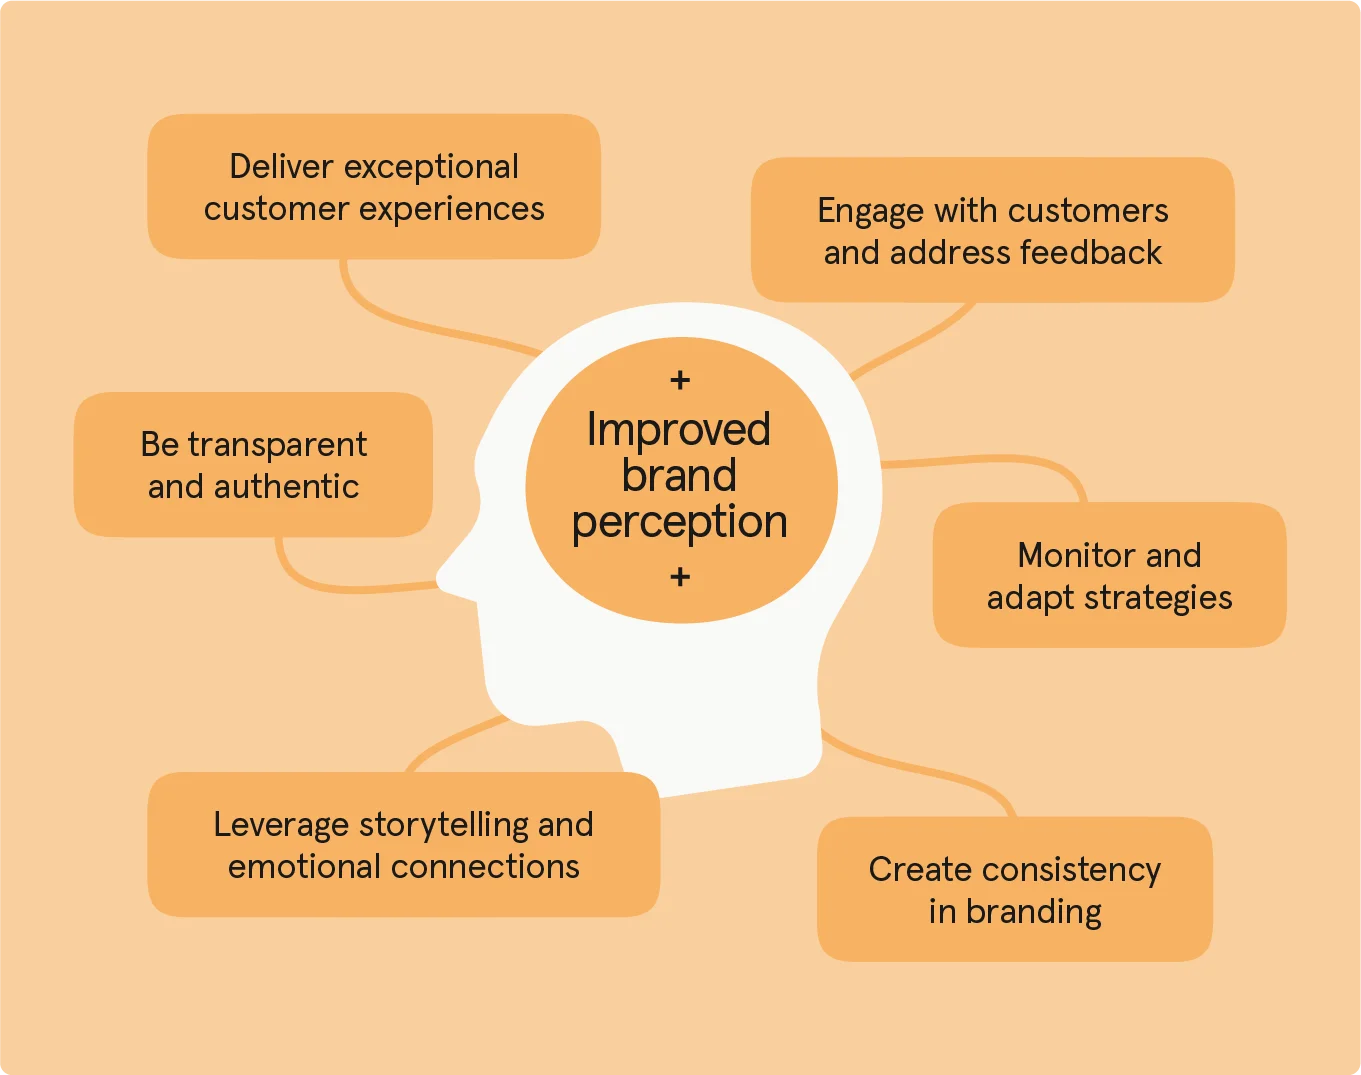 Image recaps strategies to improve brand perception.